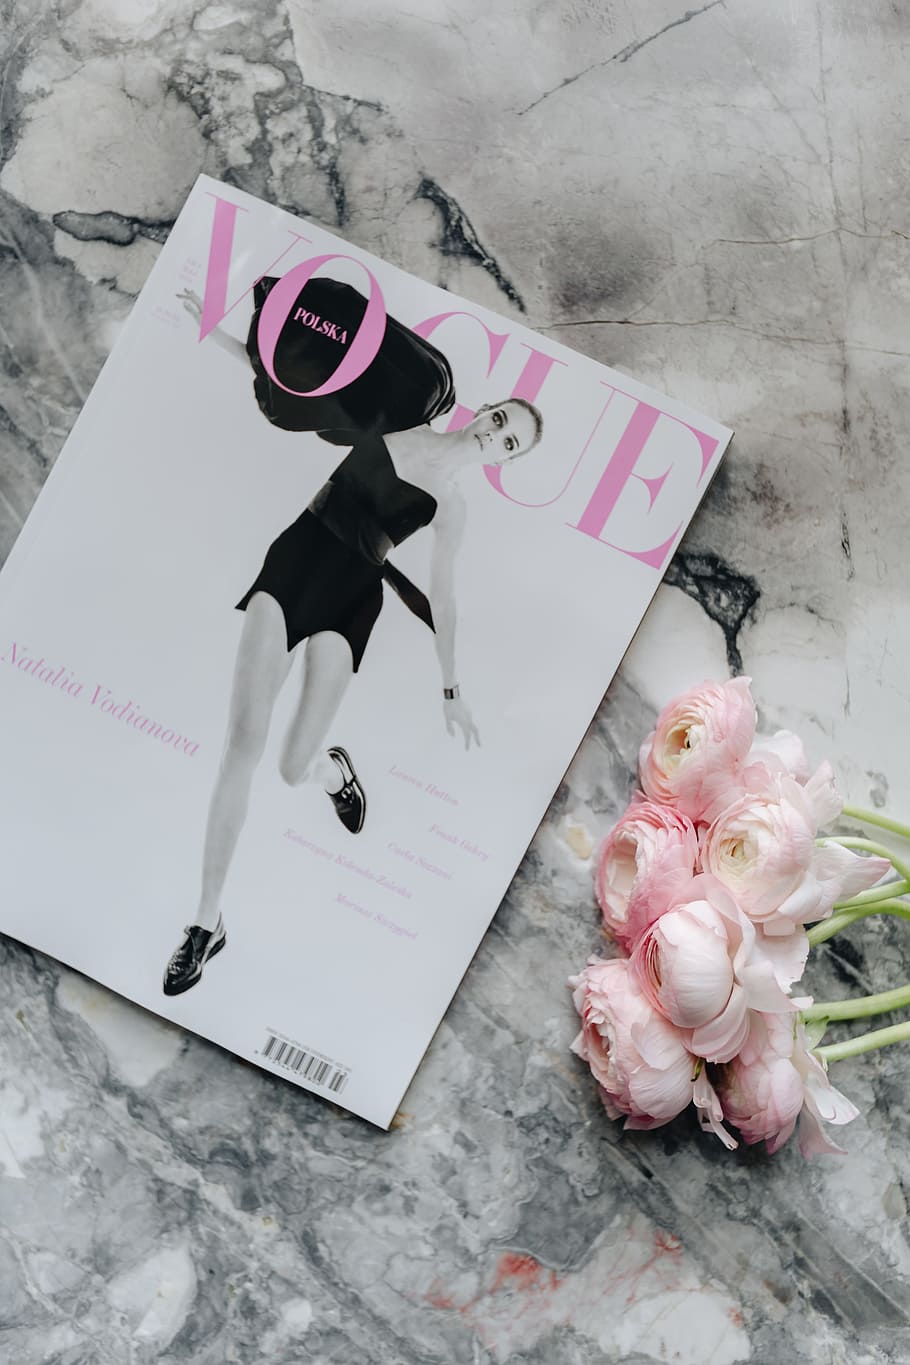 vogue poland 2 2018, &, lovely, buttercup flowers, flora, linda, revista, floral, moda, rosa